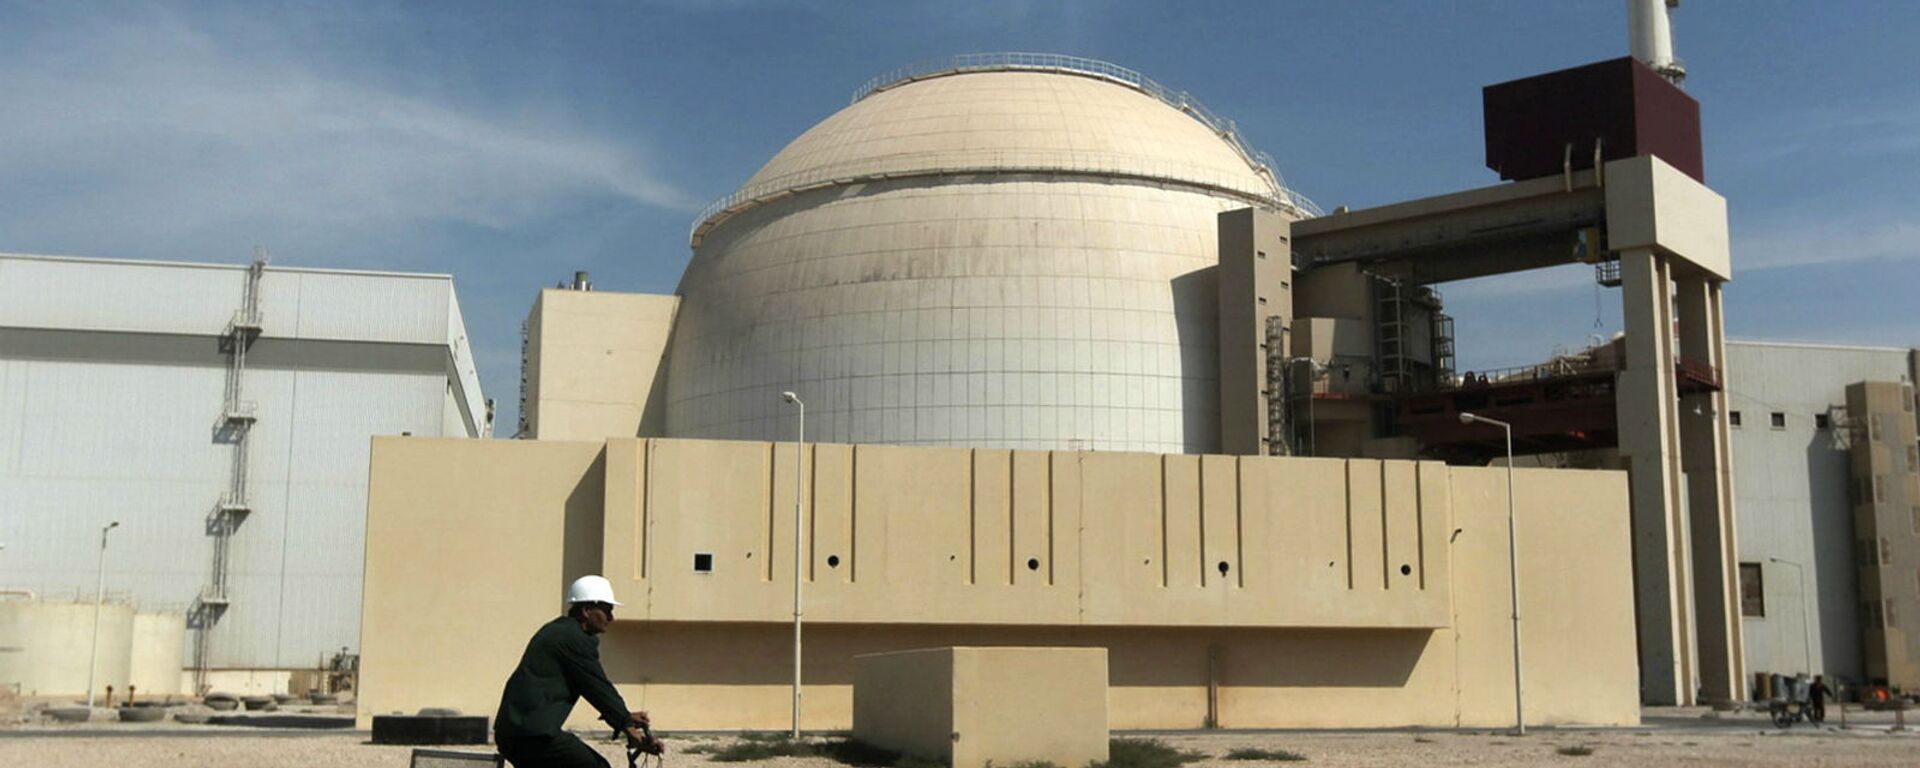 Здание реактора АЭС Бушер (26 октября 2010). Иран - Sputnik Արմենիա, 1920, 21.06.2021